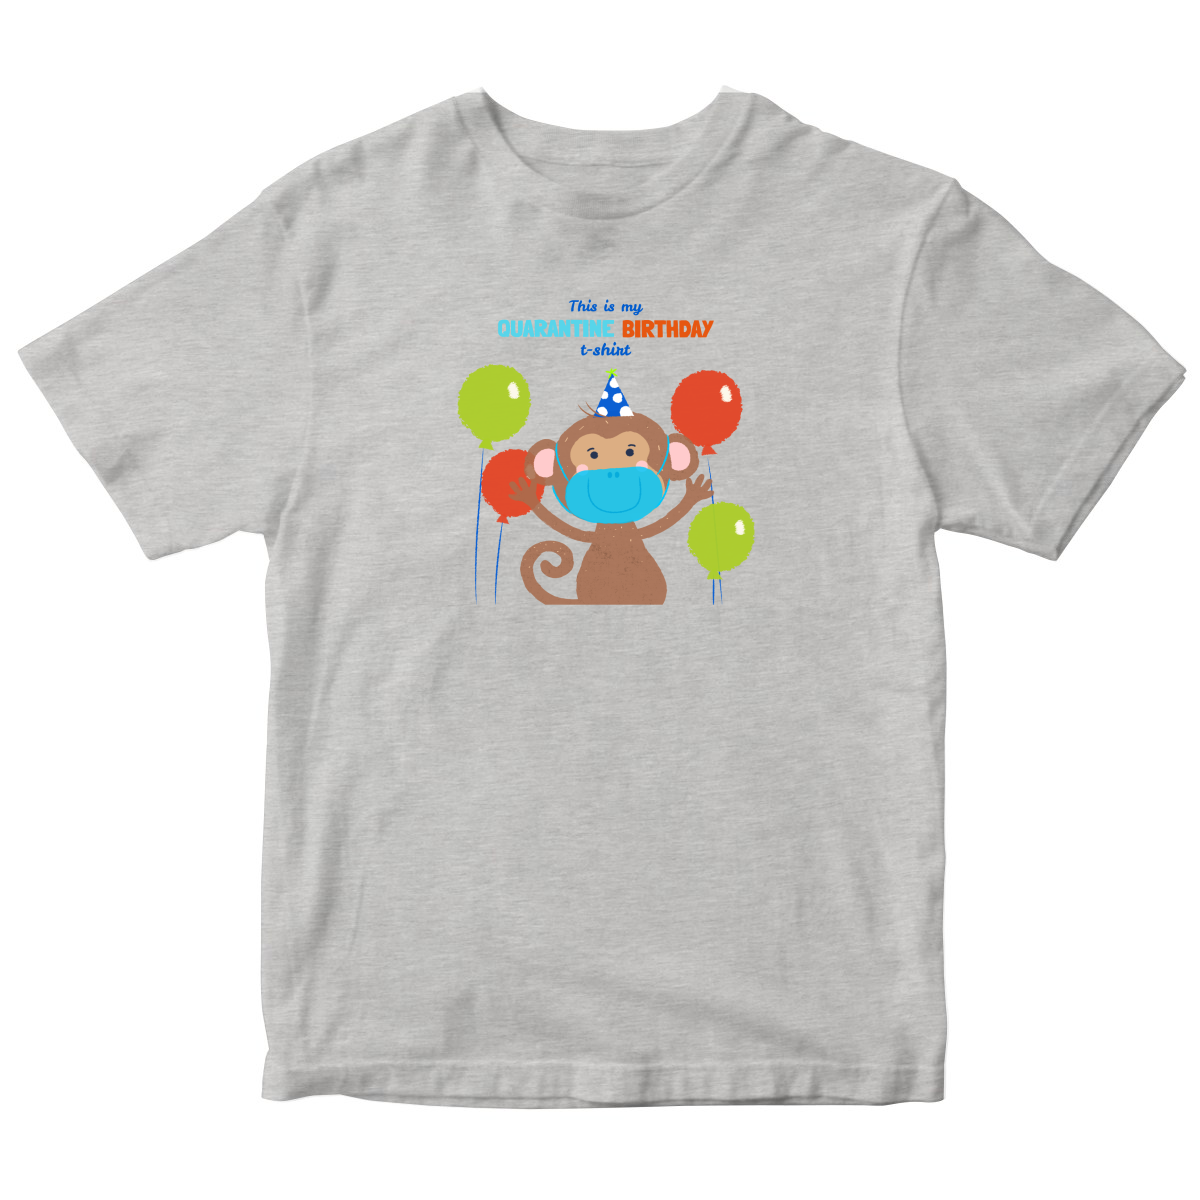 It is my quarantine birthday  Toddler T-shirt | Gray